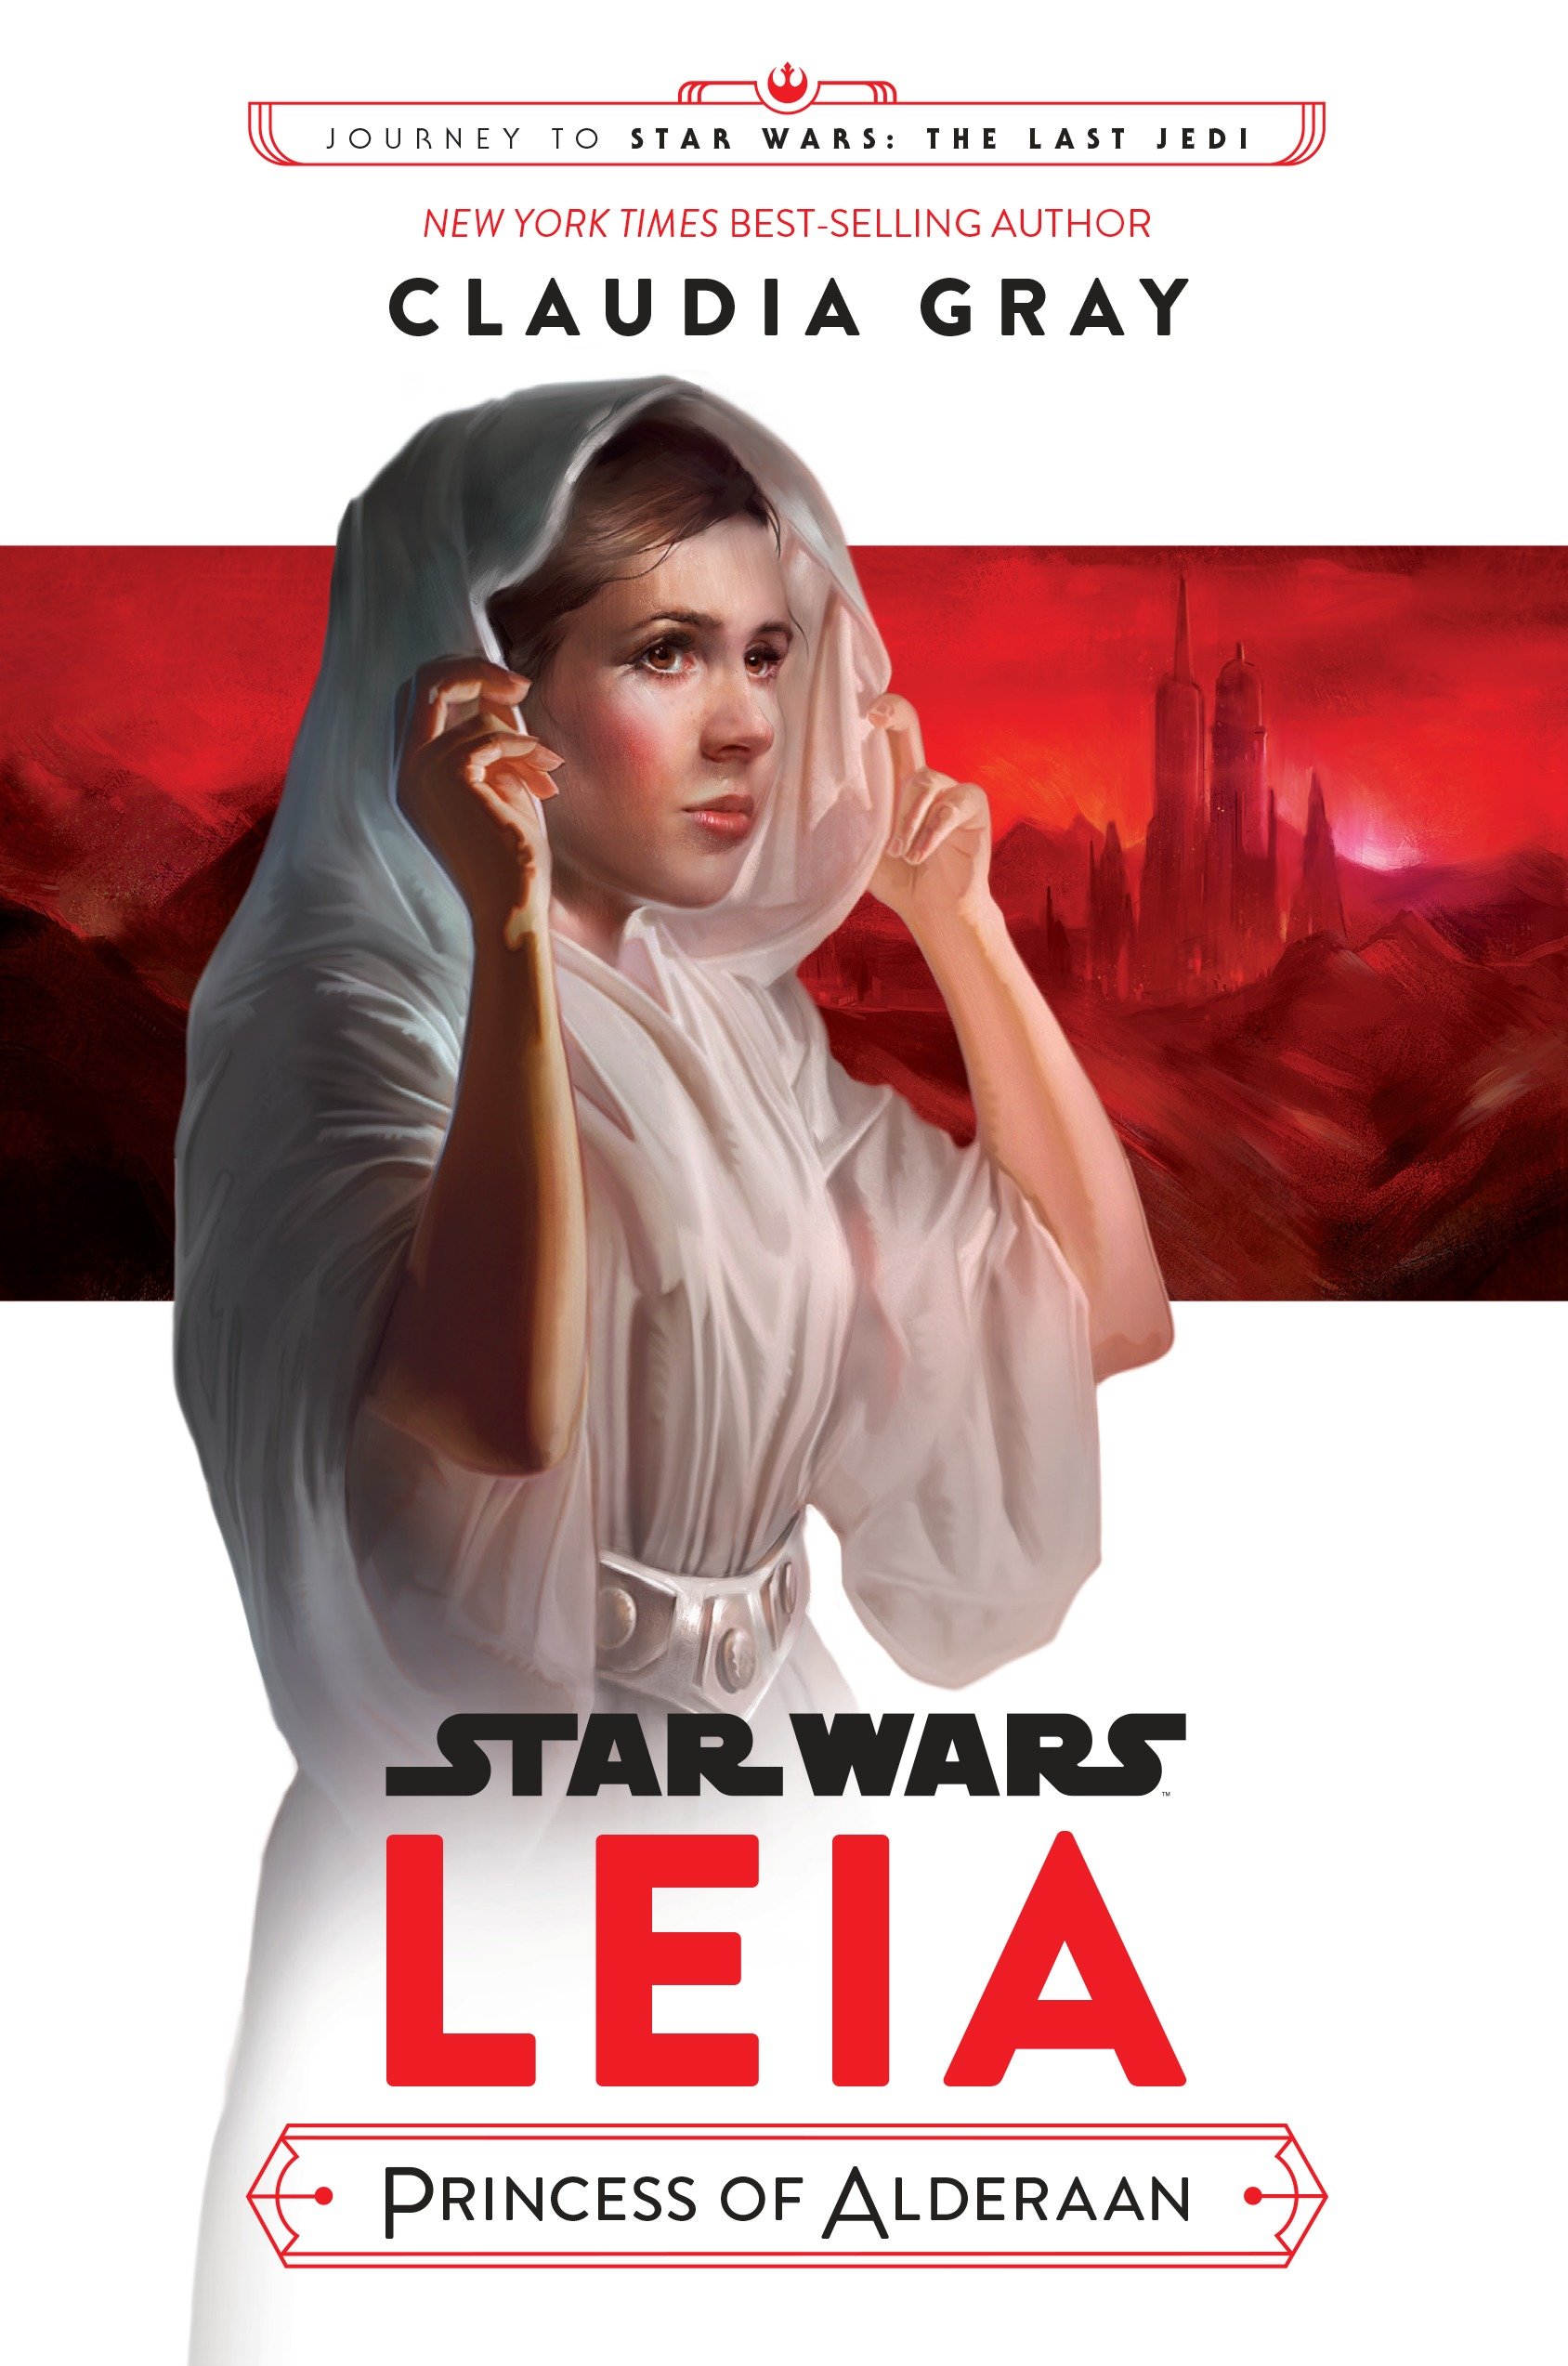 Okładka wydania oryginalnego — Leia: Princess of Alderaan.